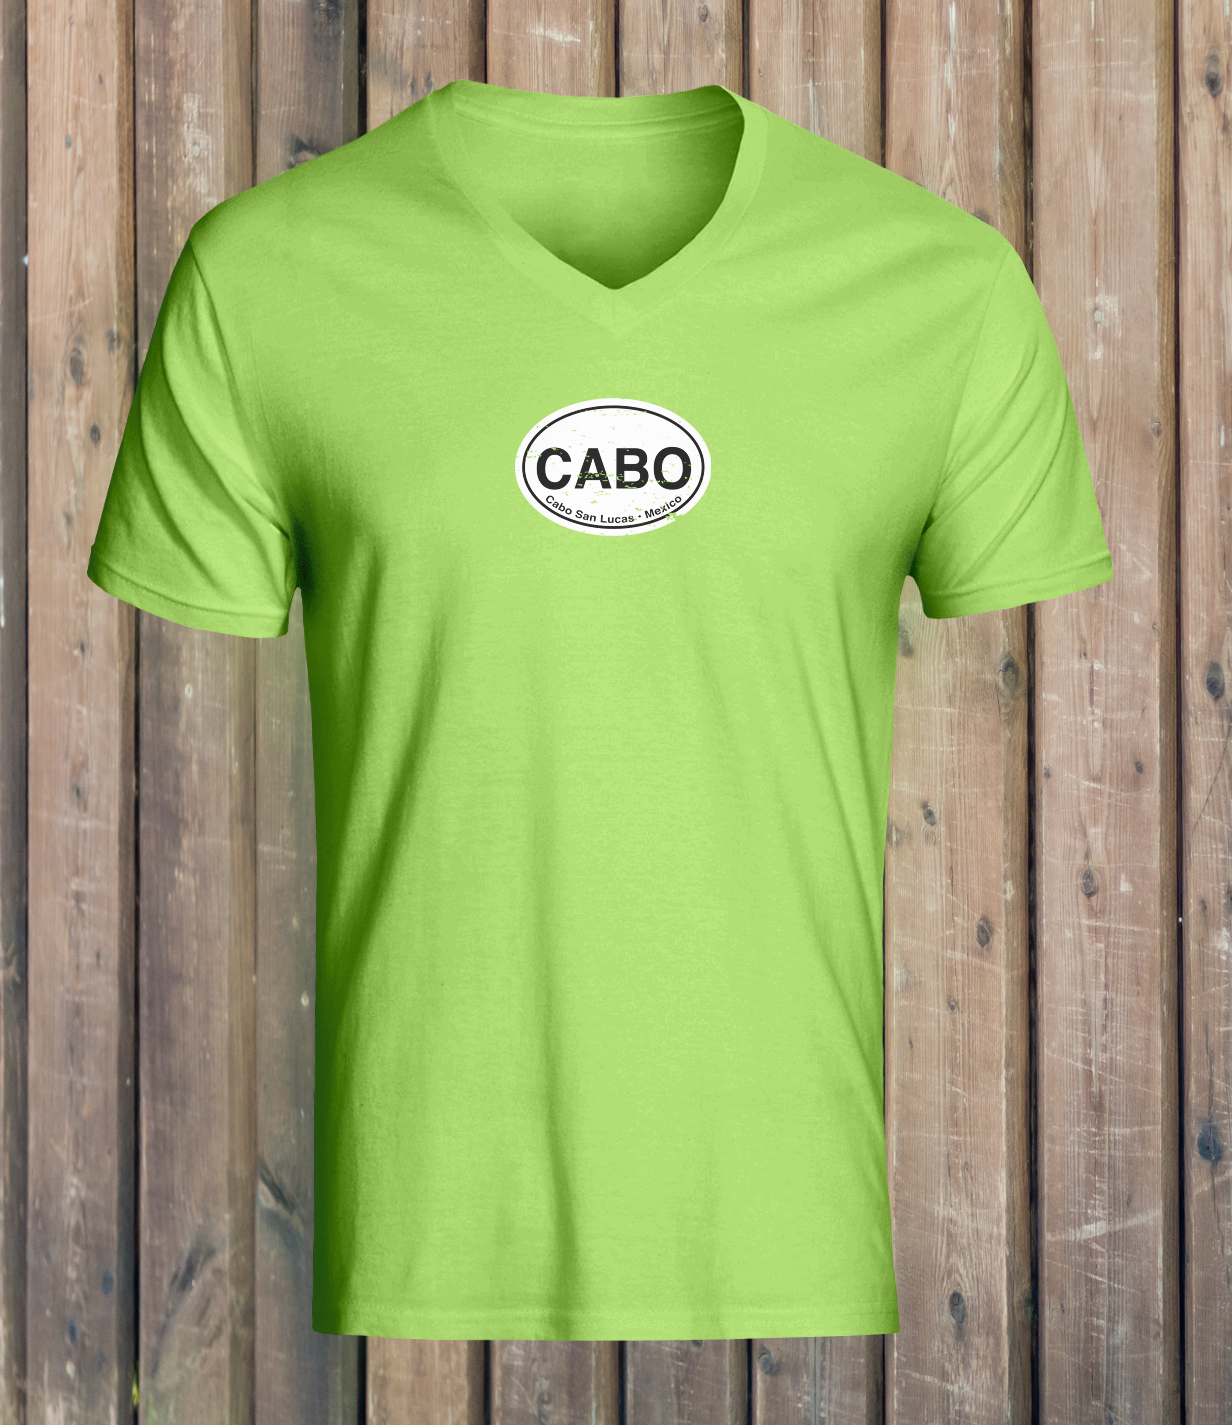 Cabo Women's Classic V-Neck T-Shirts - My Destination Location